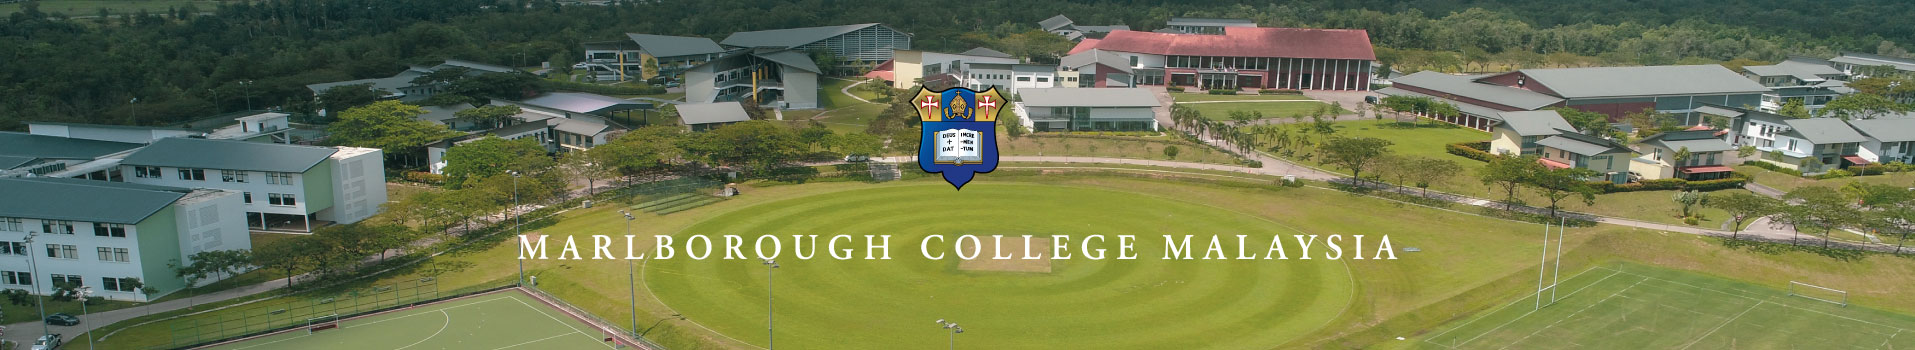 Marlborough College Malaysia Banner